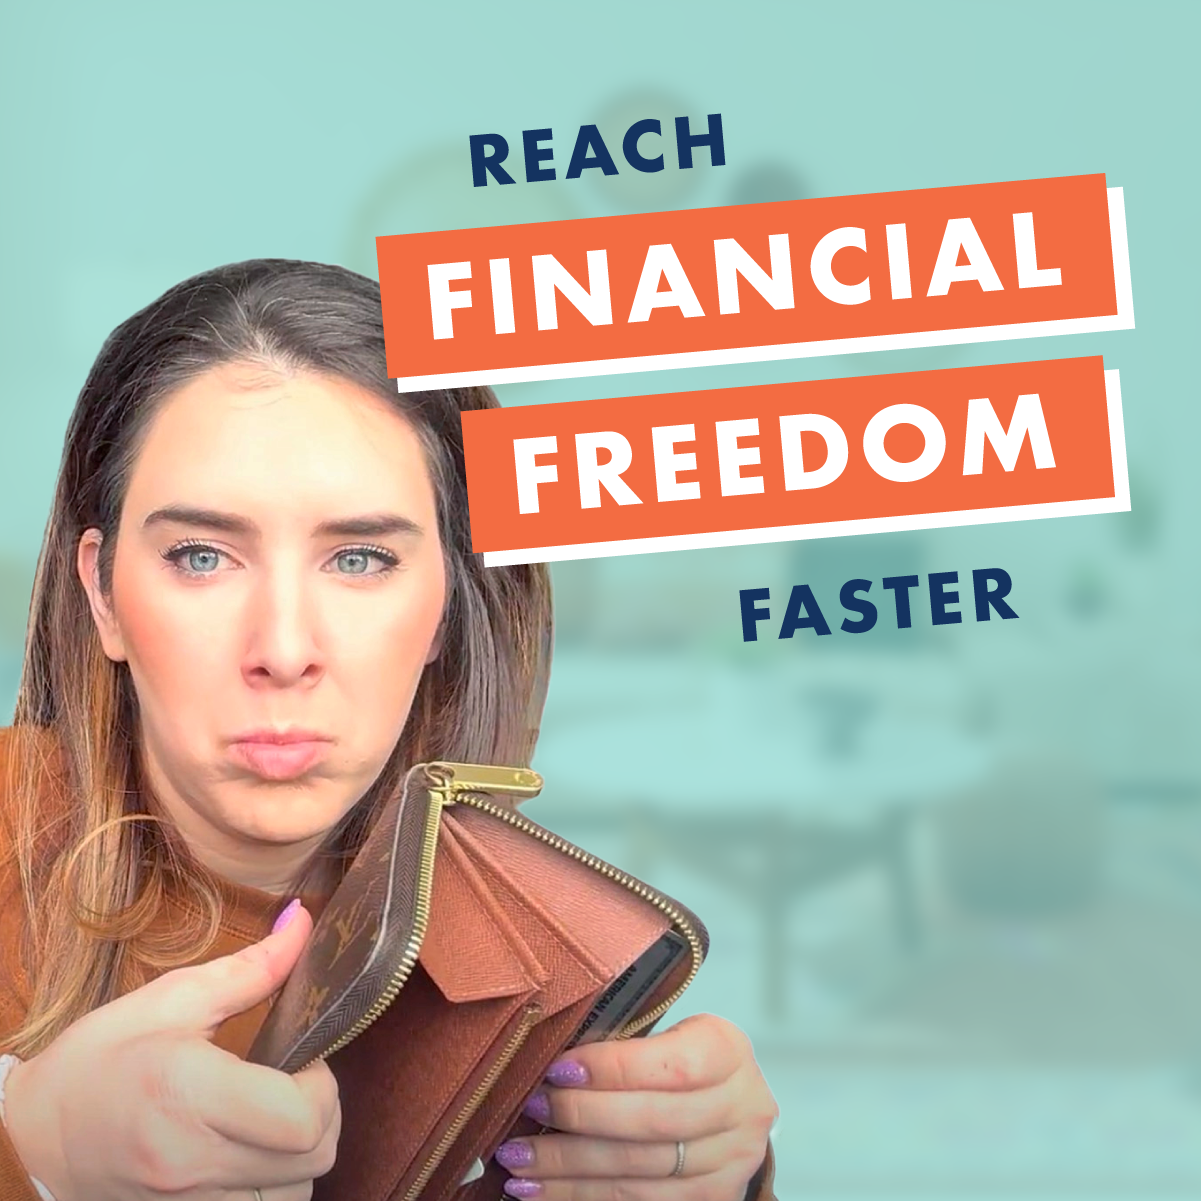 Reach Financial Freedom Faster